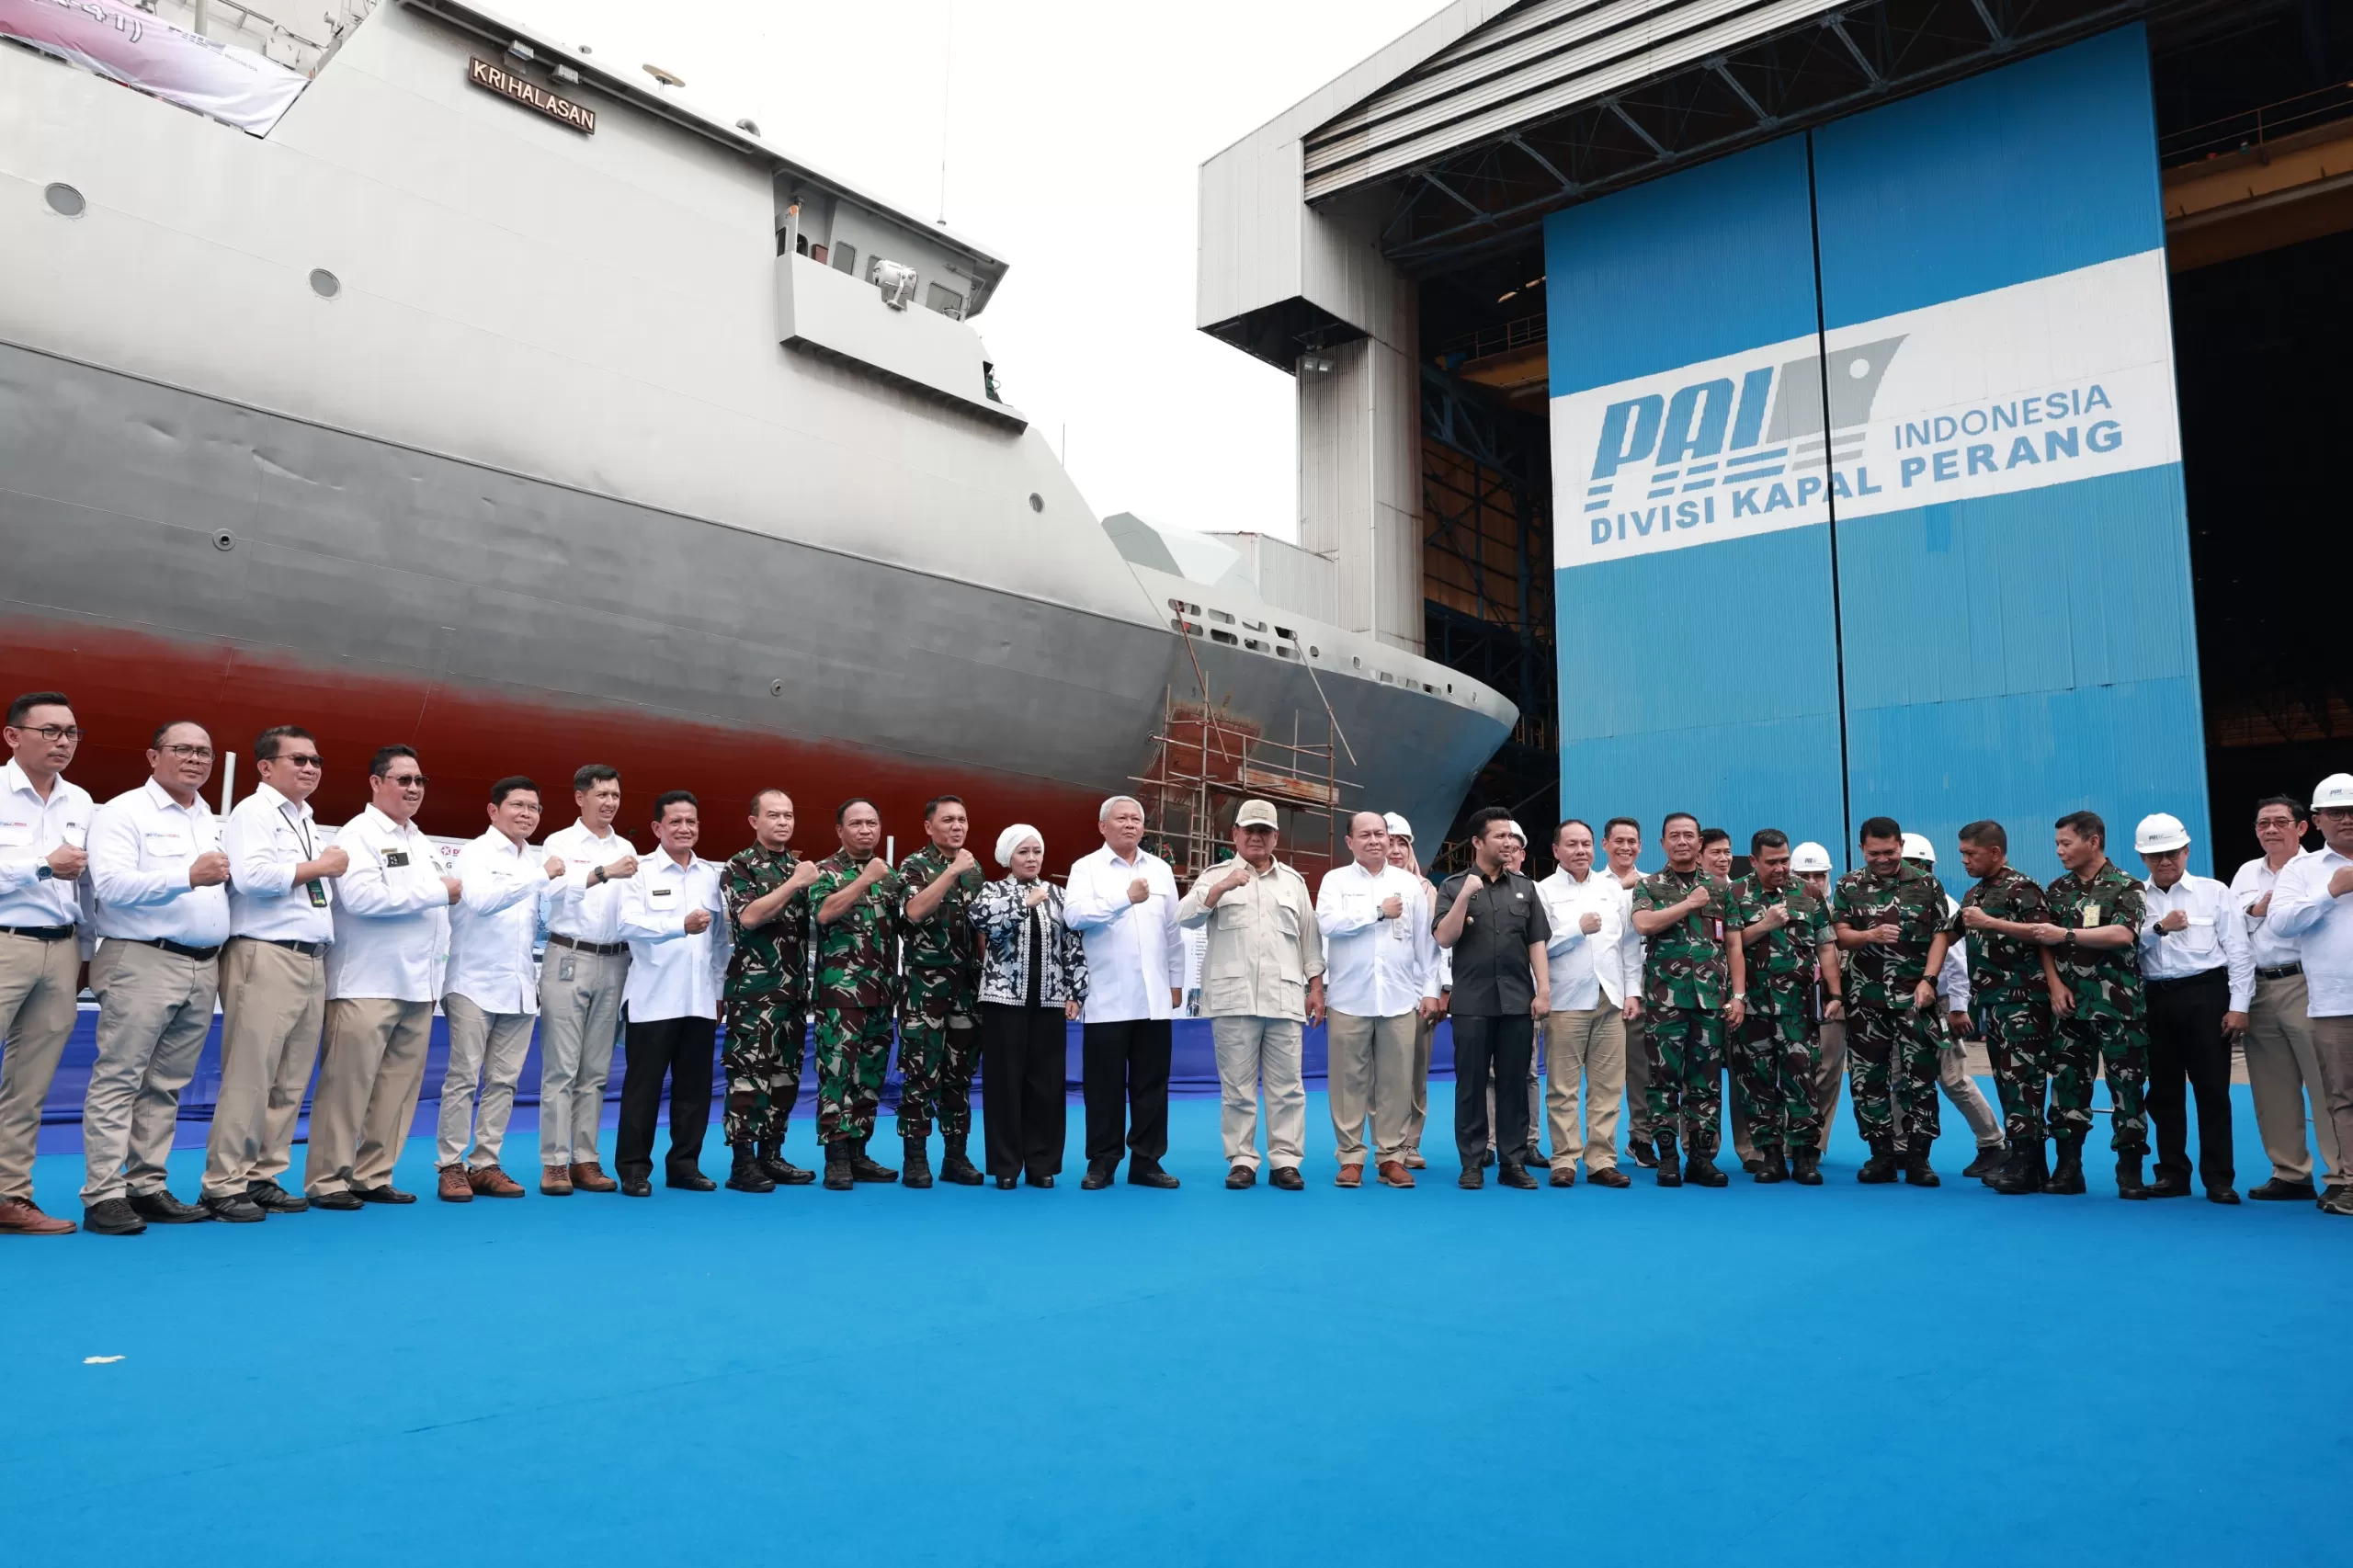 Tinjau Progres Modernisasi 41 Kapal di Surabaya, Prabowo Ingatkan Situasi Geopolitik yang Tidak Menentu